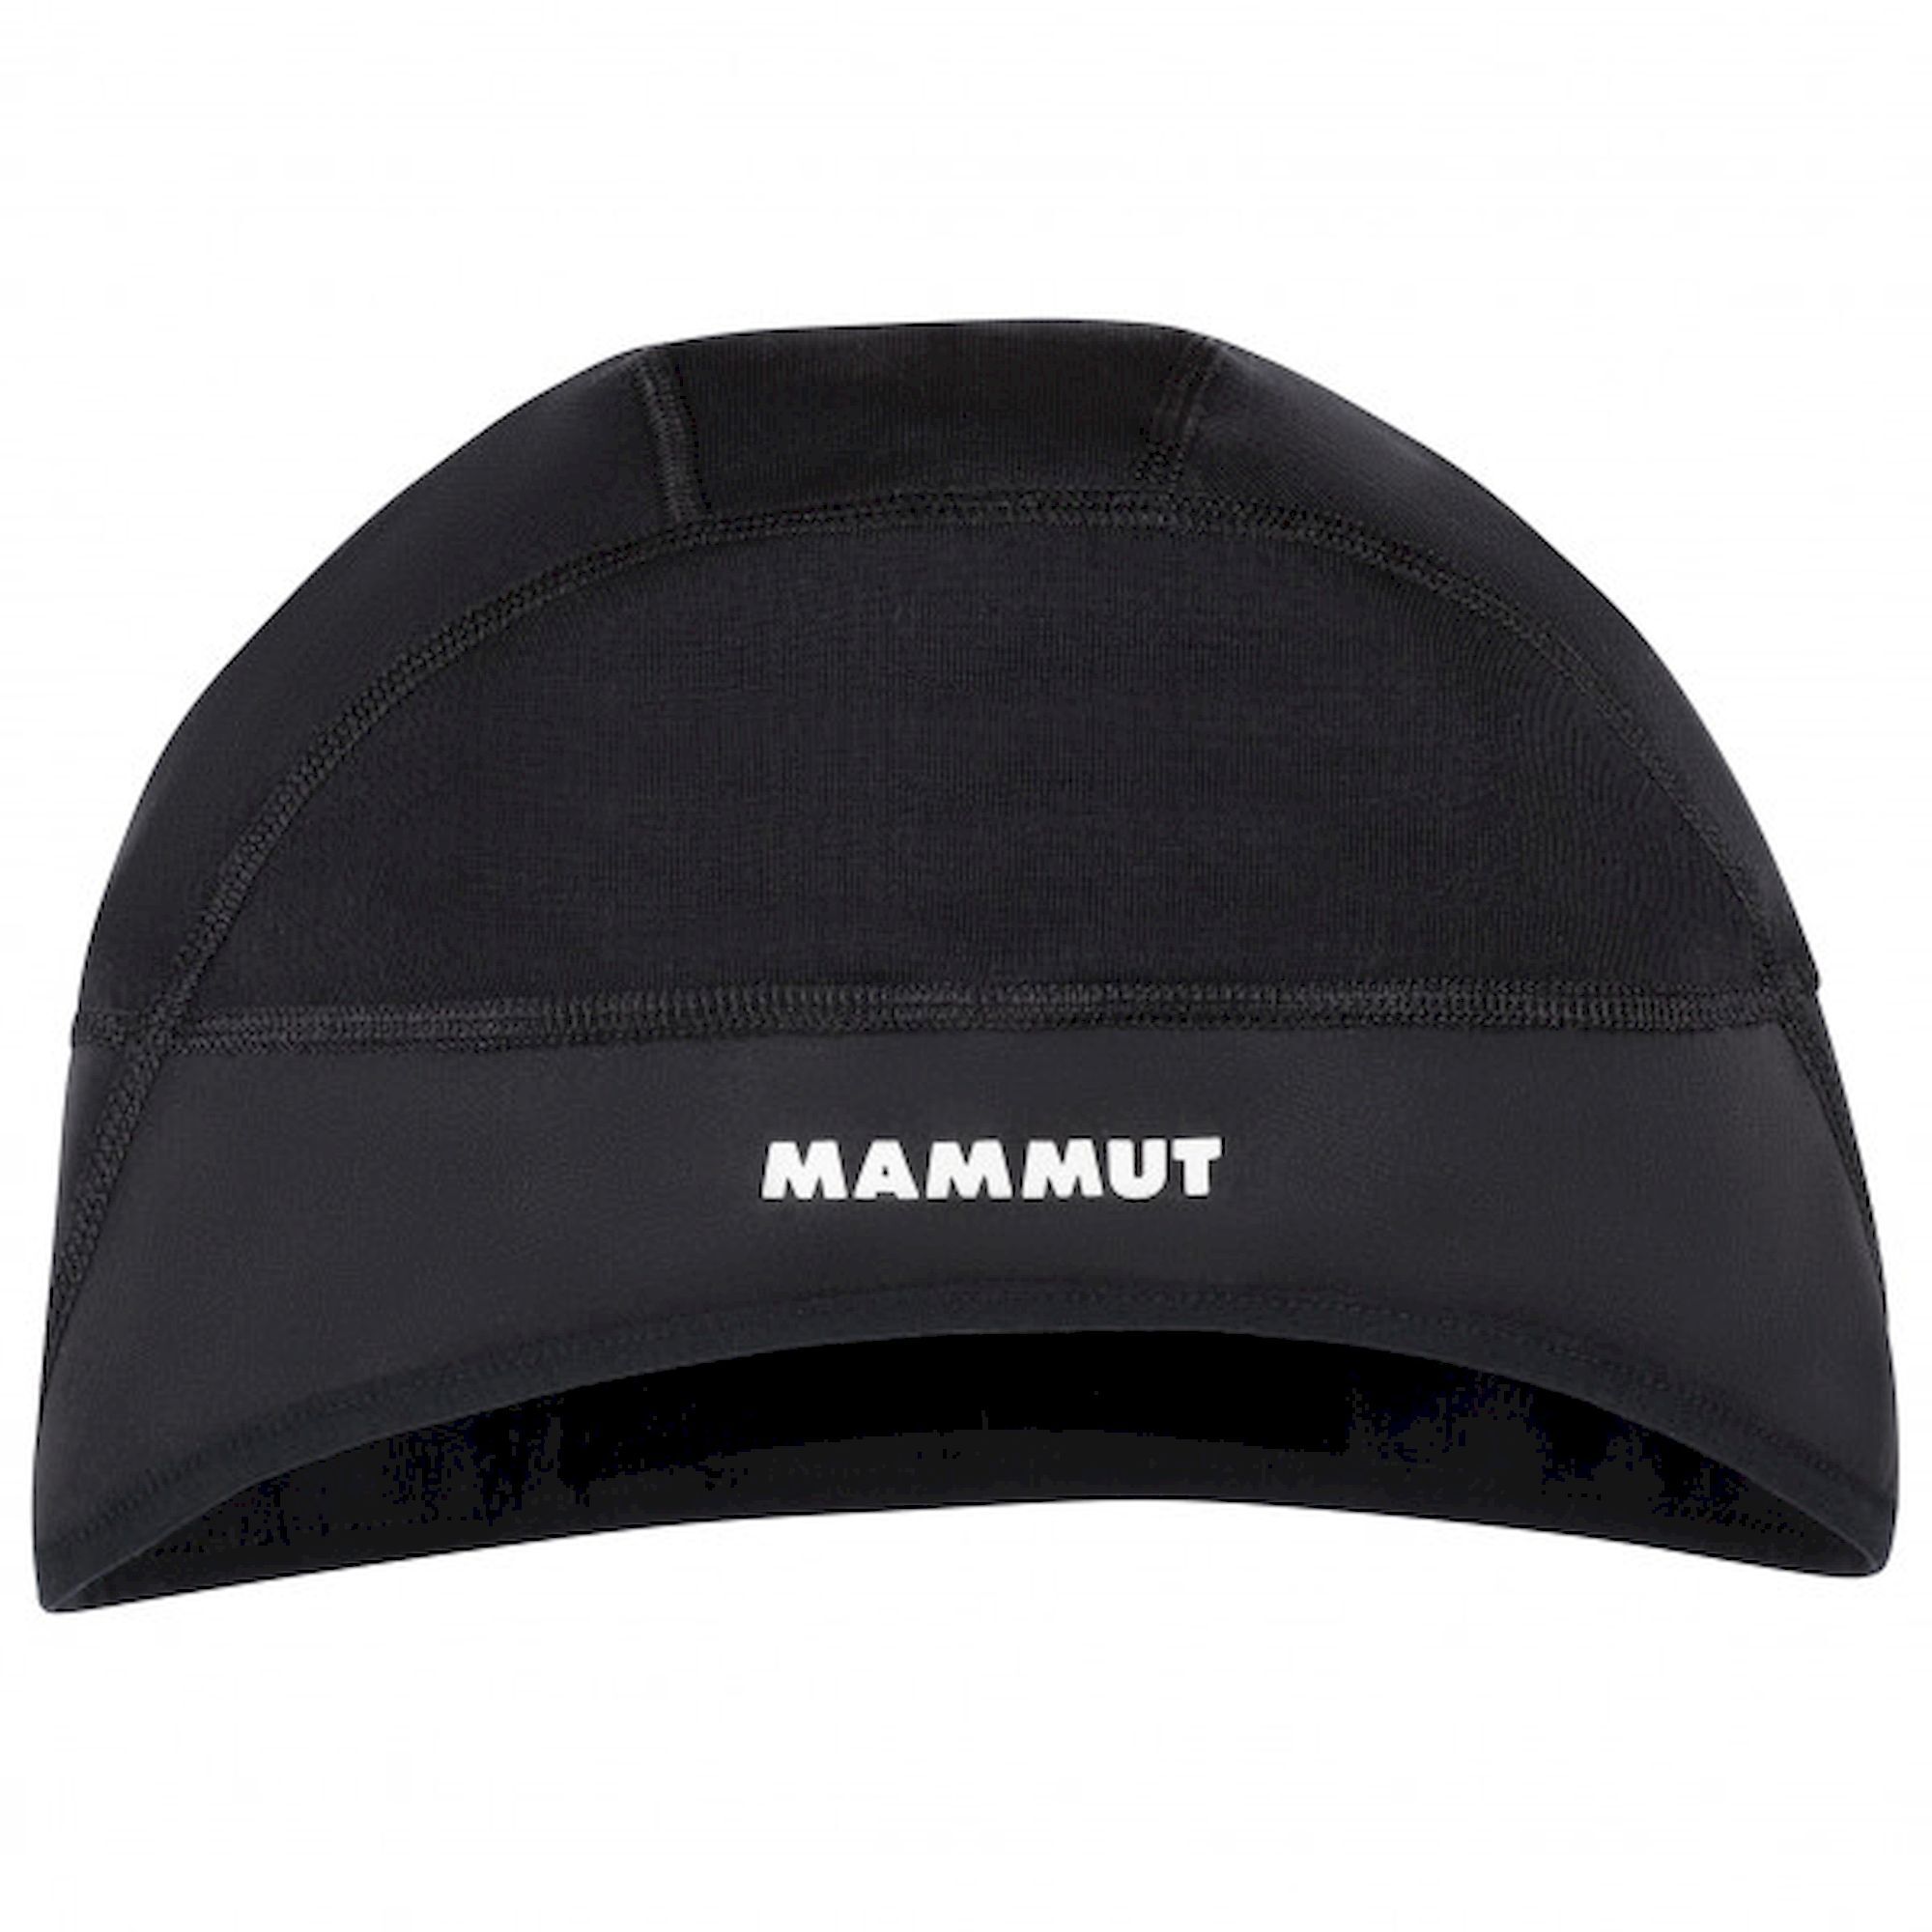 Mammut WS Helm Cap - Berretto - Uomo